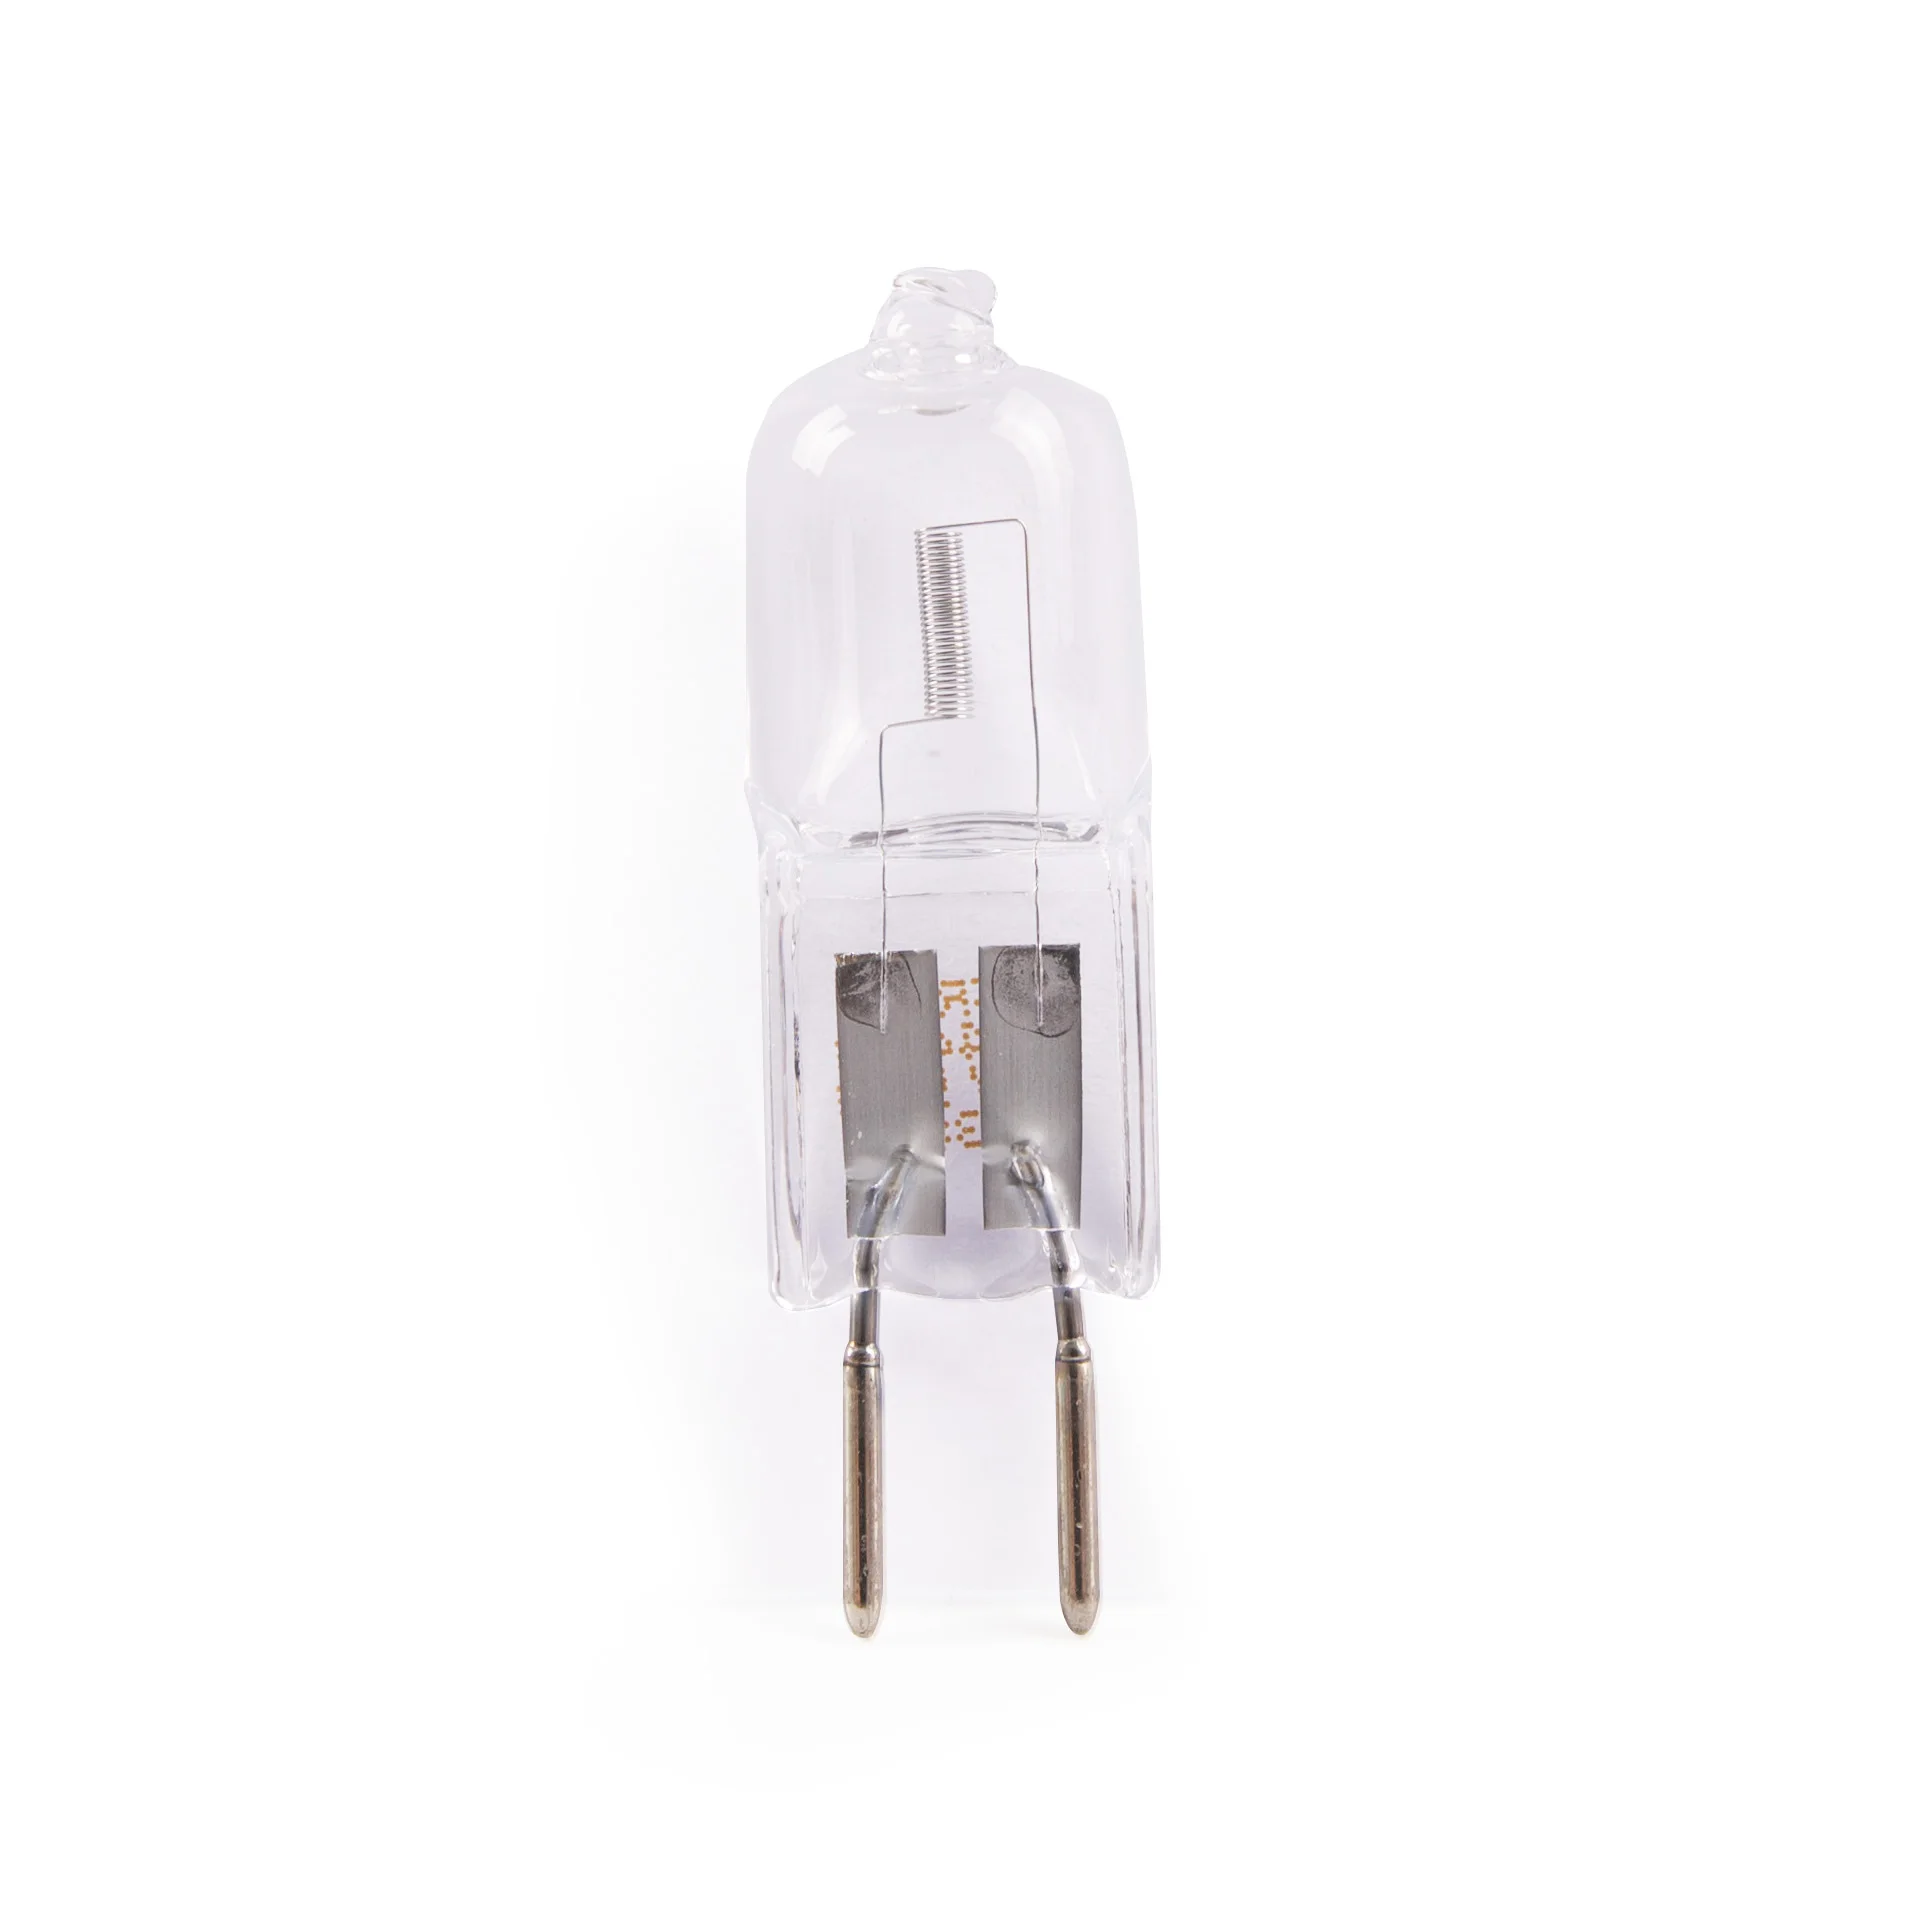 

MICROSCOPE /DENTAL UNIT LAMP 12v 150w base GY6.35 JC 2-pins HALOGEN CE BULB